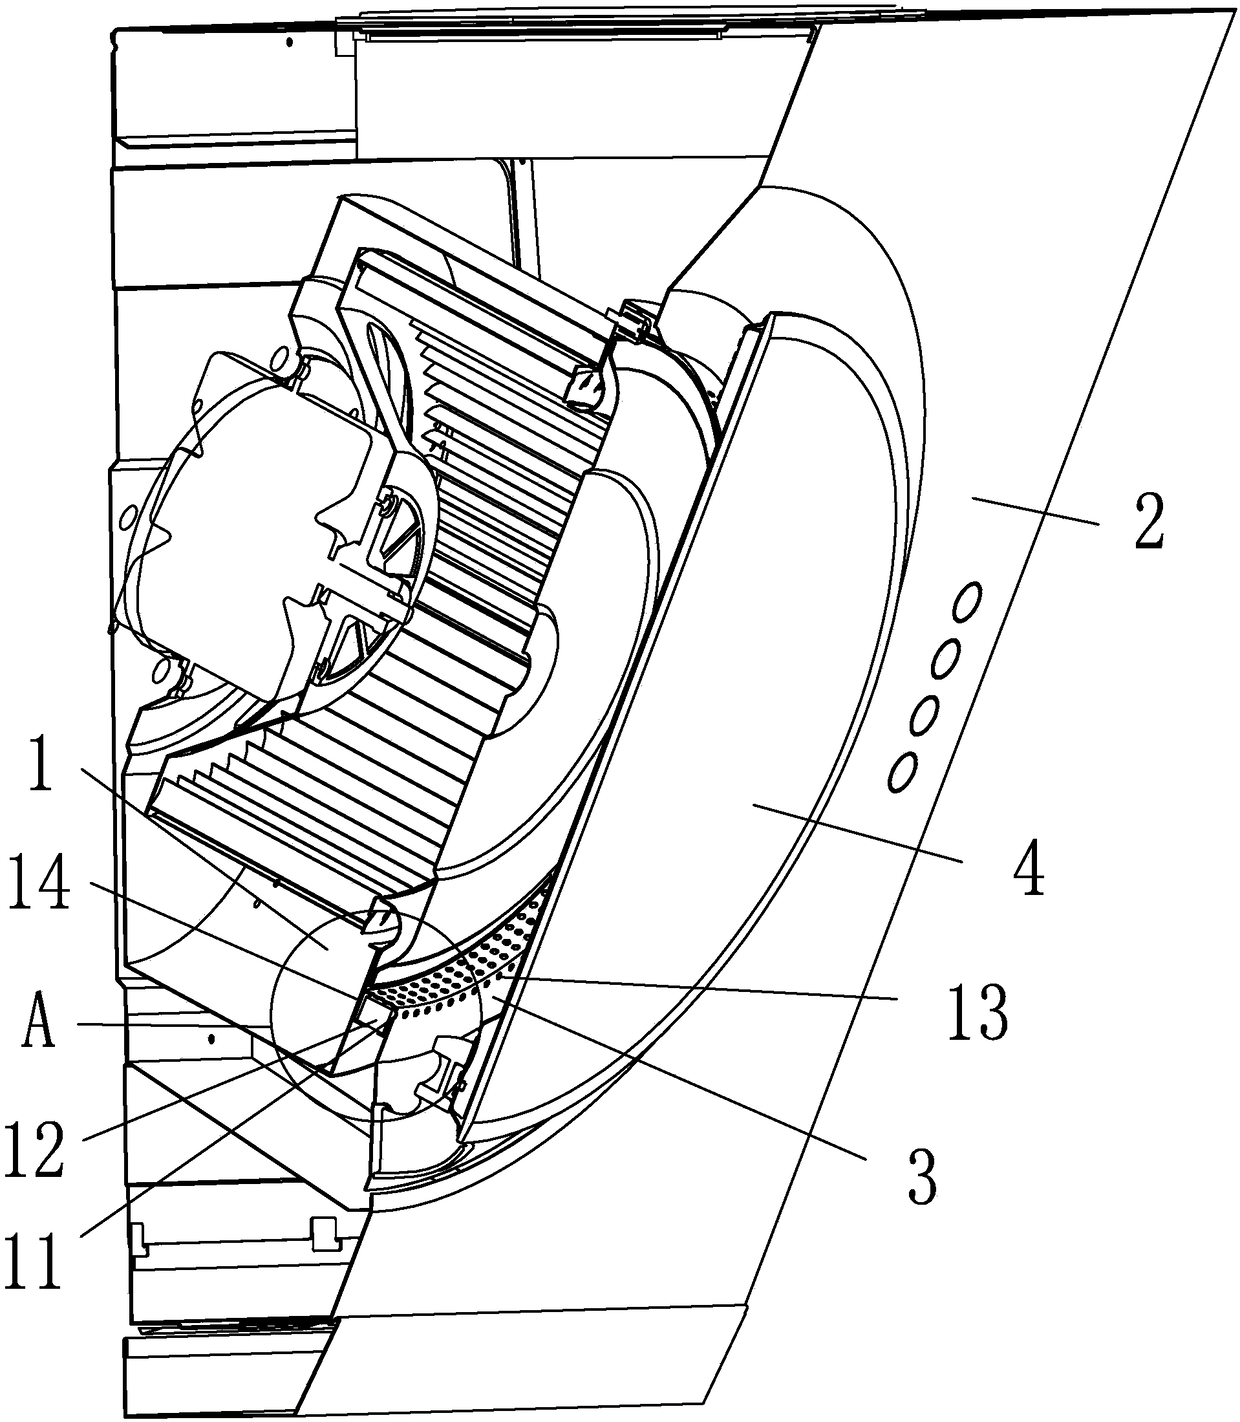 Side suction range hood noise reduction device